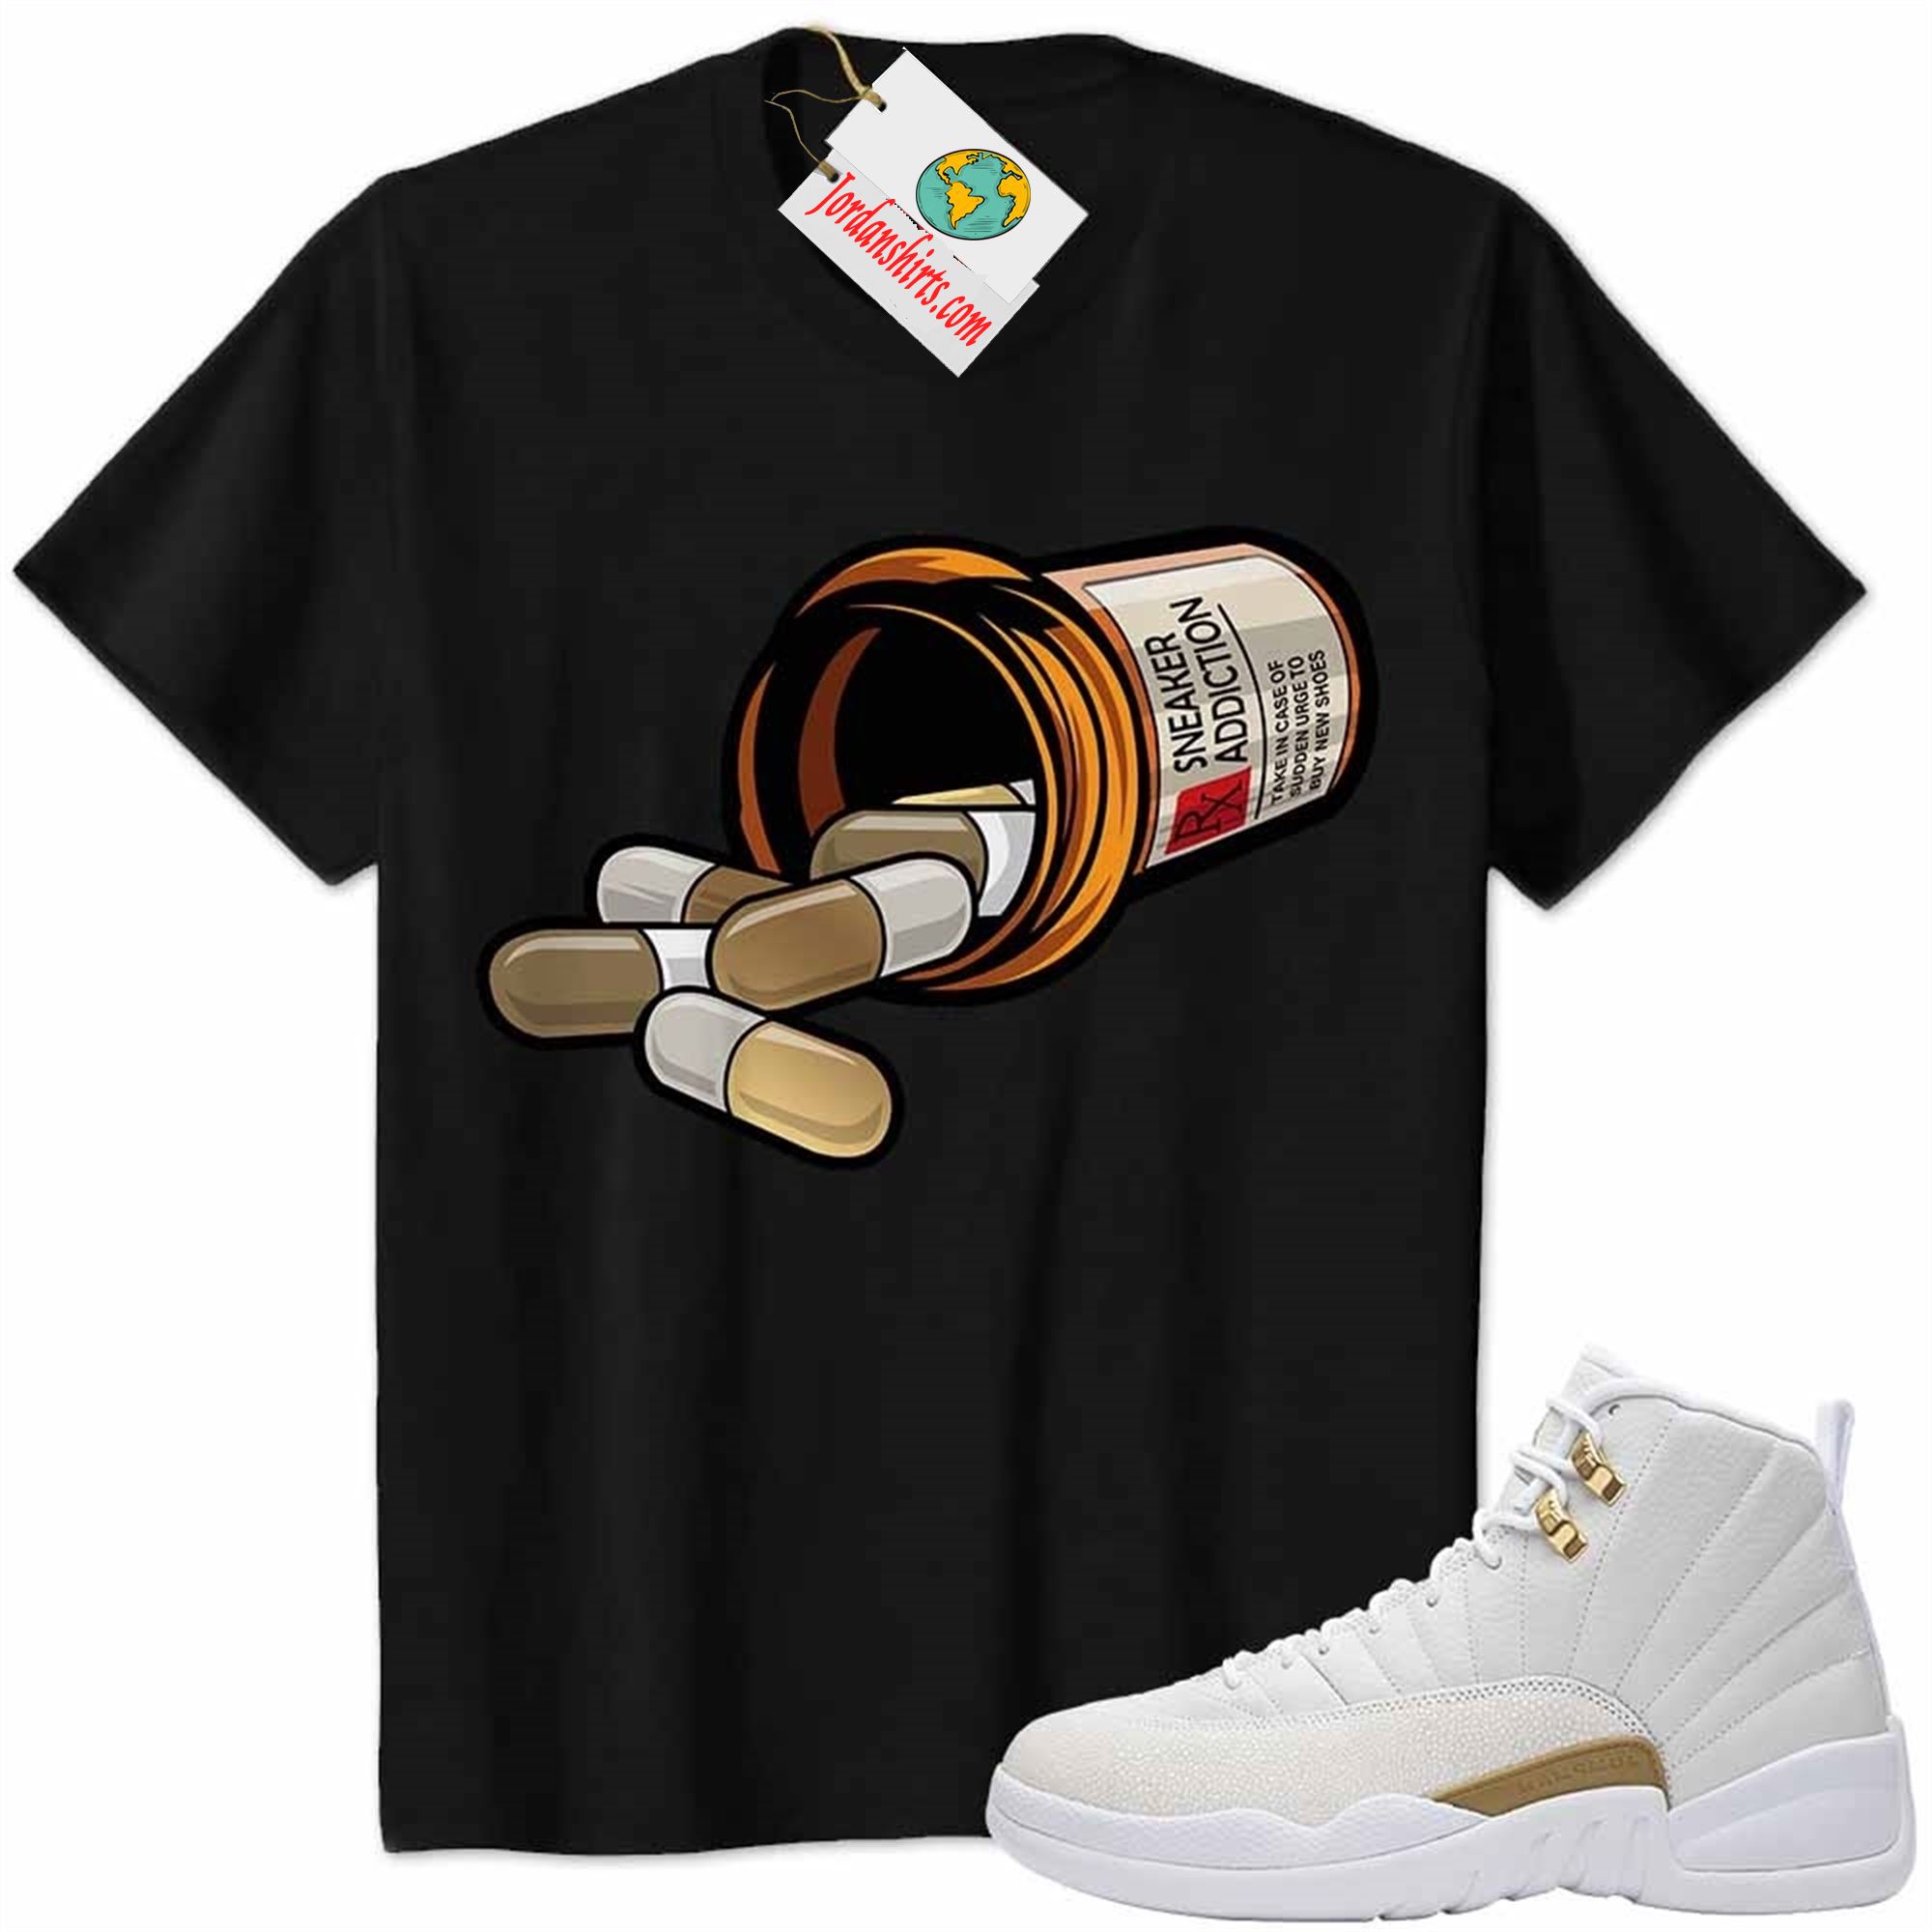 Jordan 12 Shirt, Rx Drugs Pill Bottle Sneaker Addiction Black Air Jordan 12 Ovo 12s Size Up To 5xl